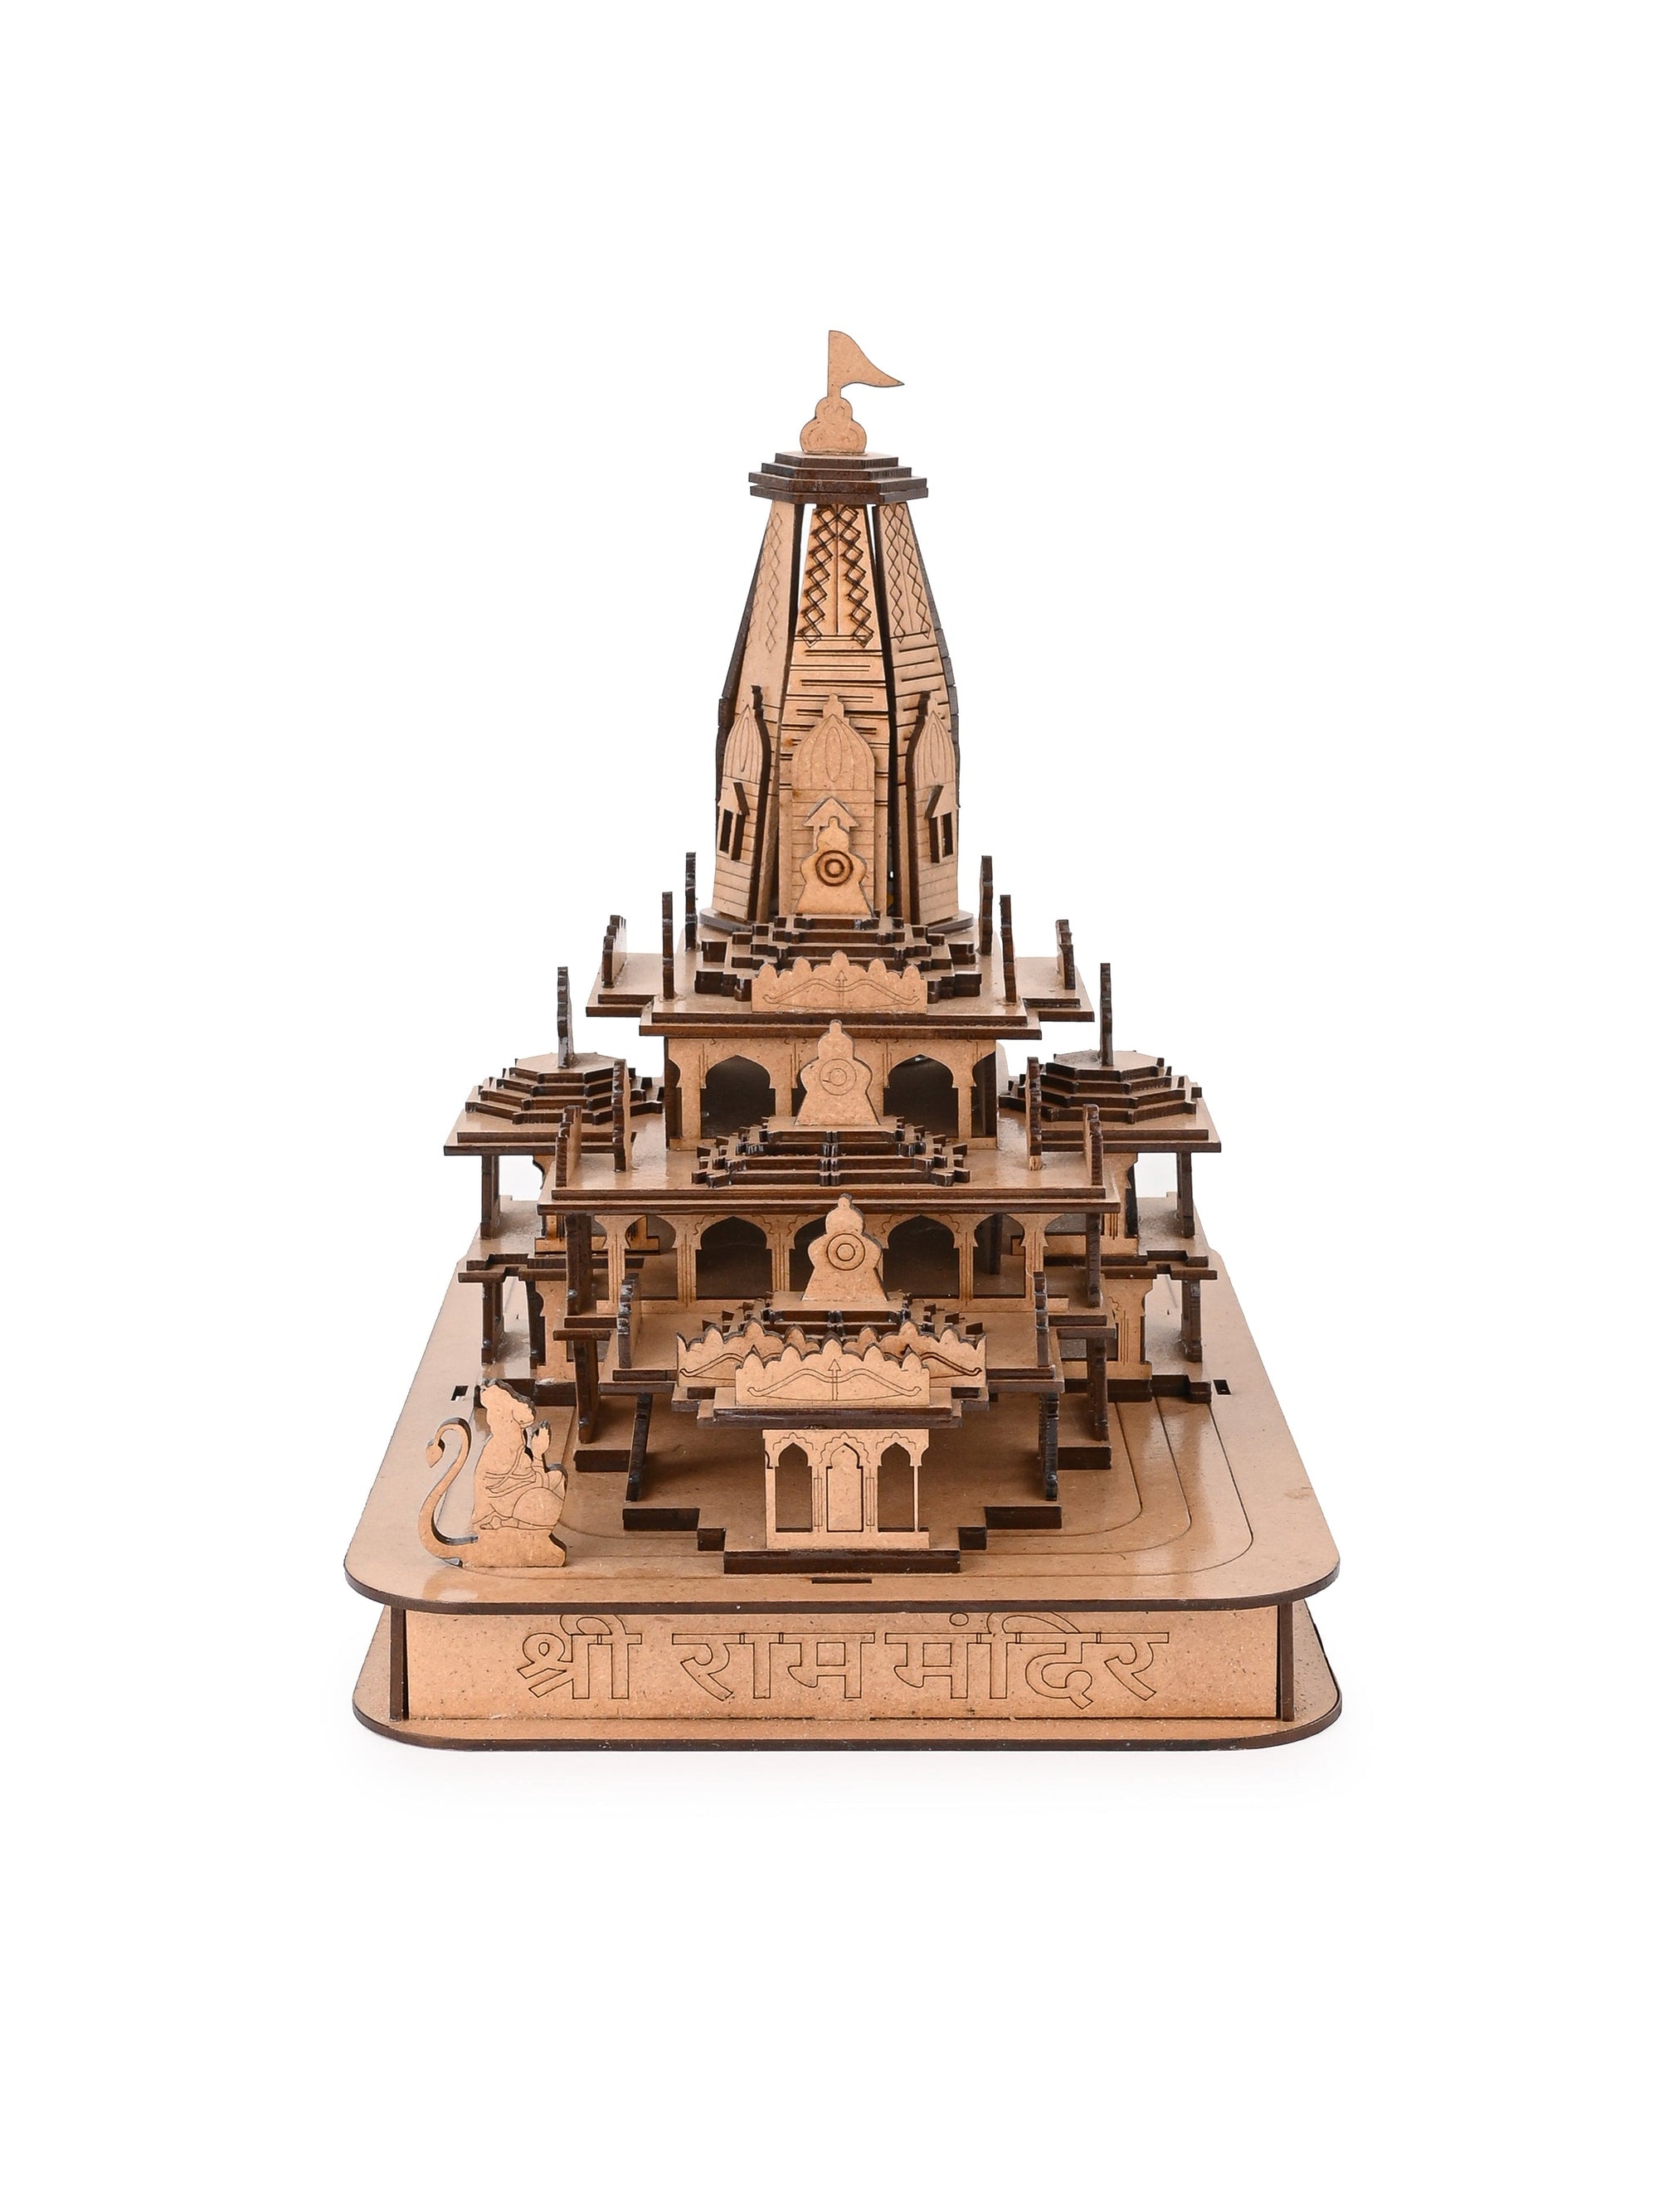 Miniature Replica of Shri Ram Mandir in Ayodhya Decorated with Lights